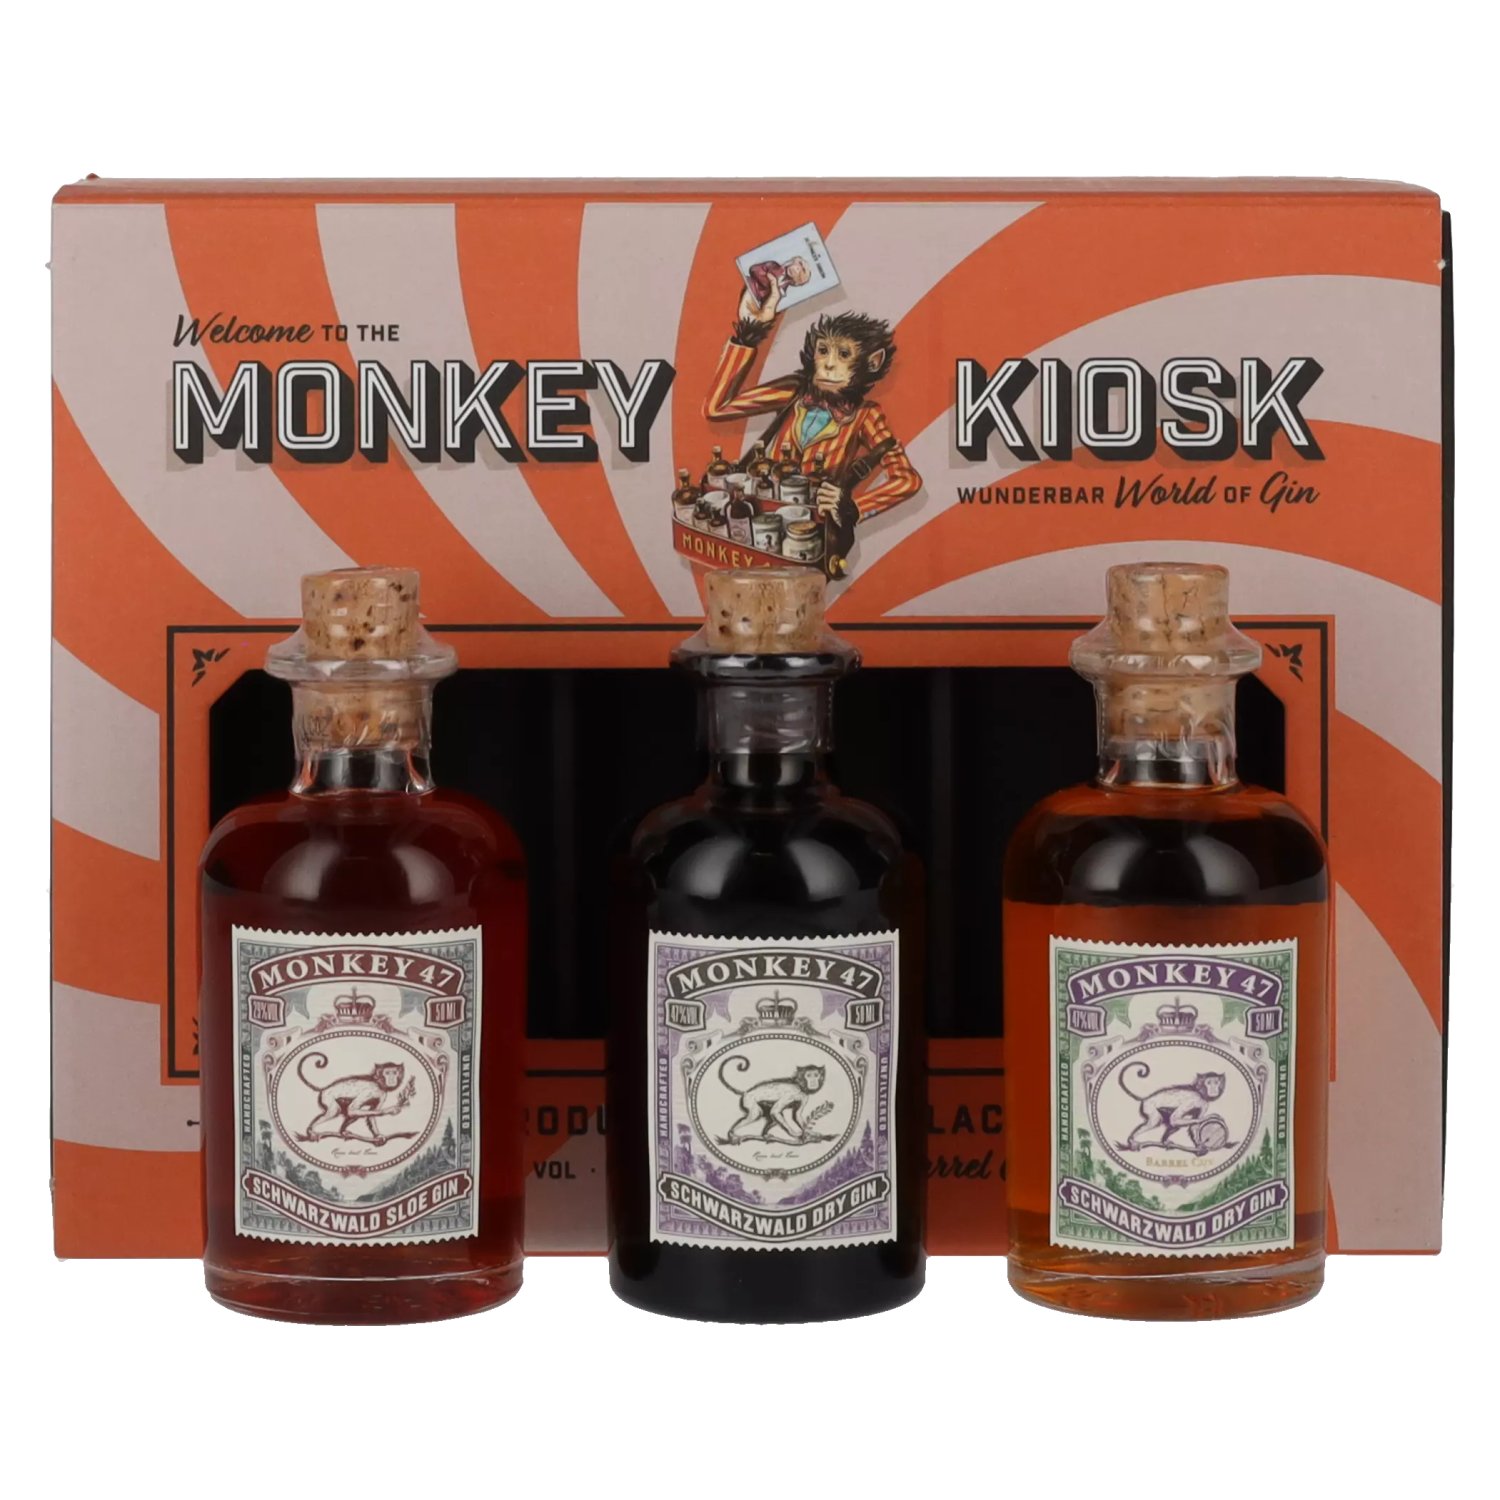 Monkey 47 Kiosk Set 41% Vol. 3x0,05l in Giftbox | Gin